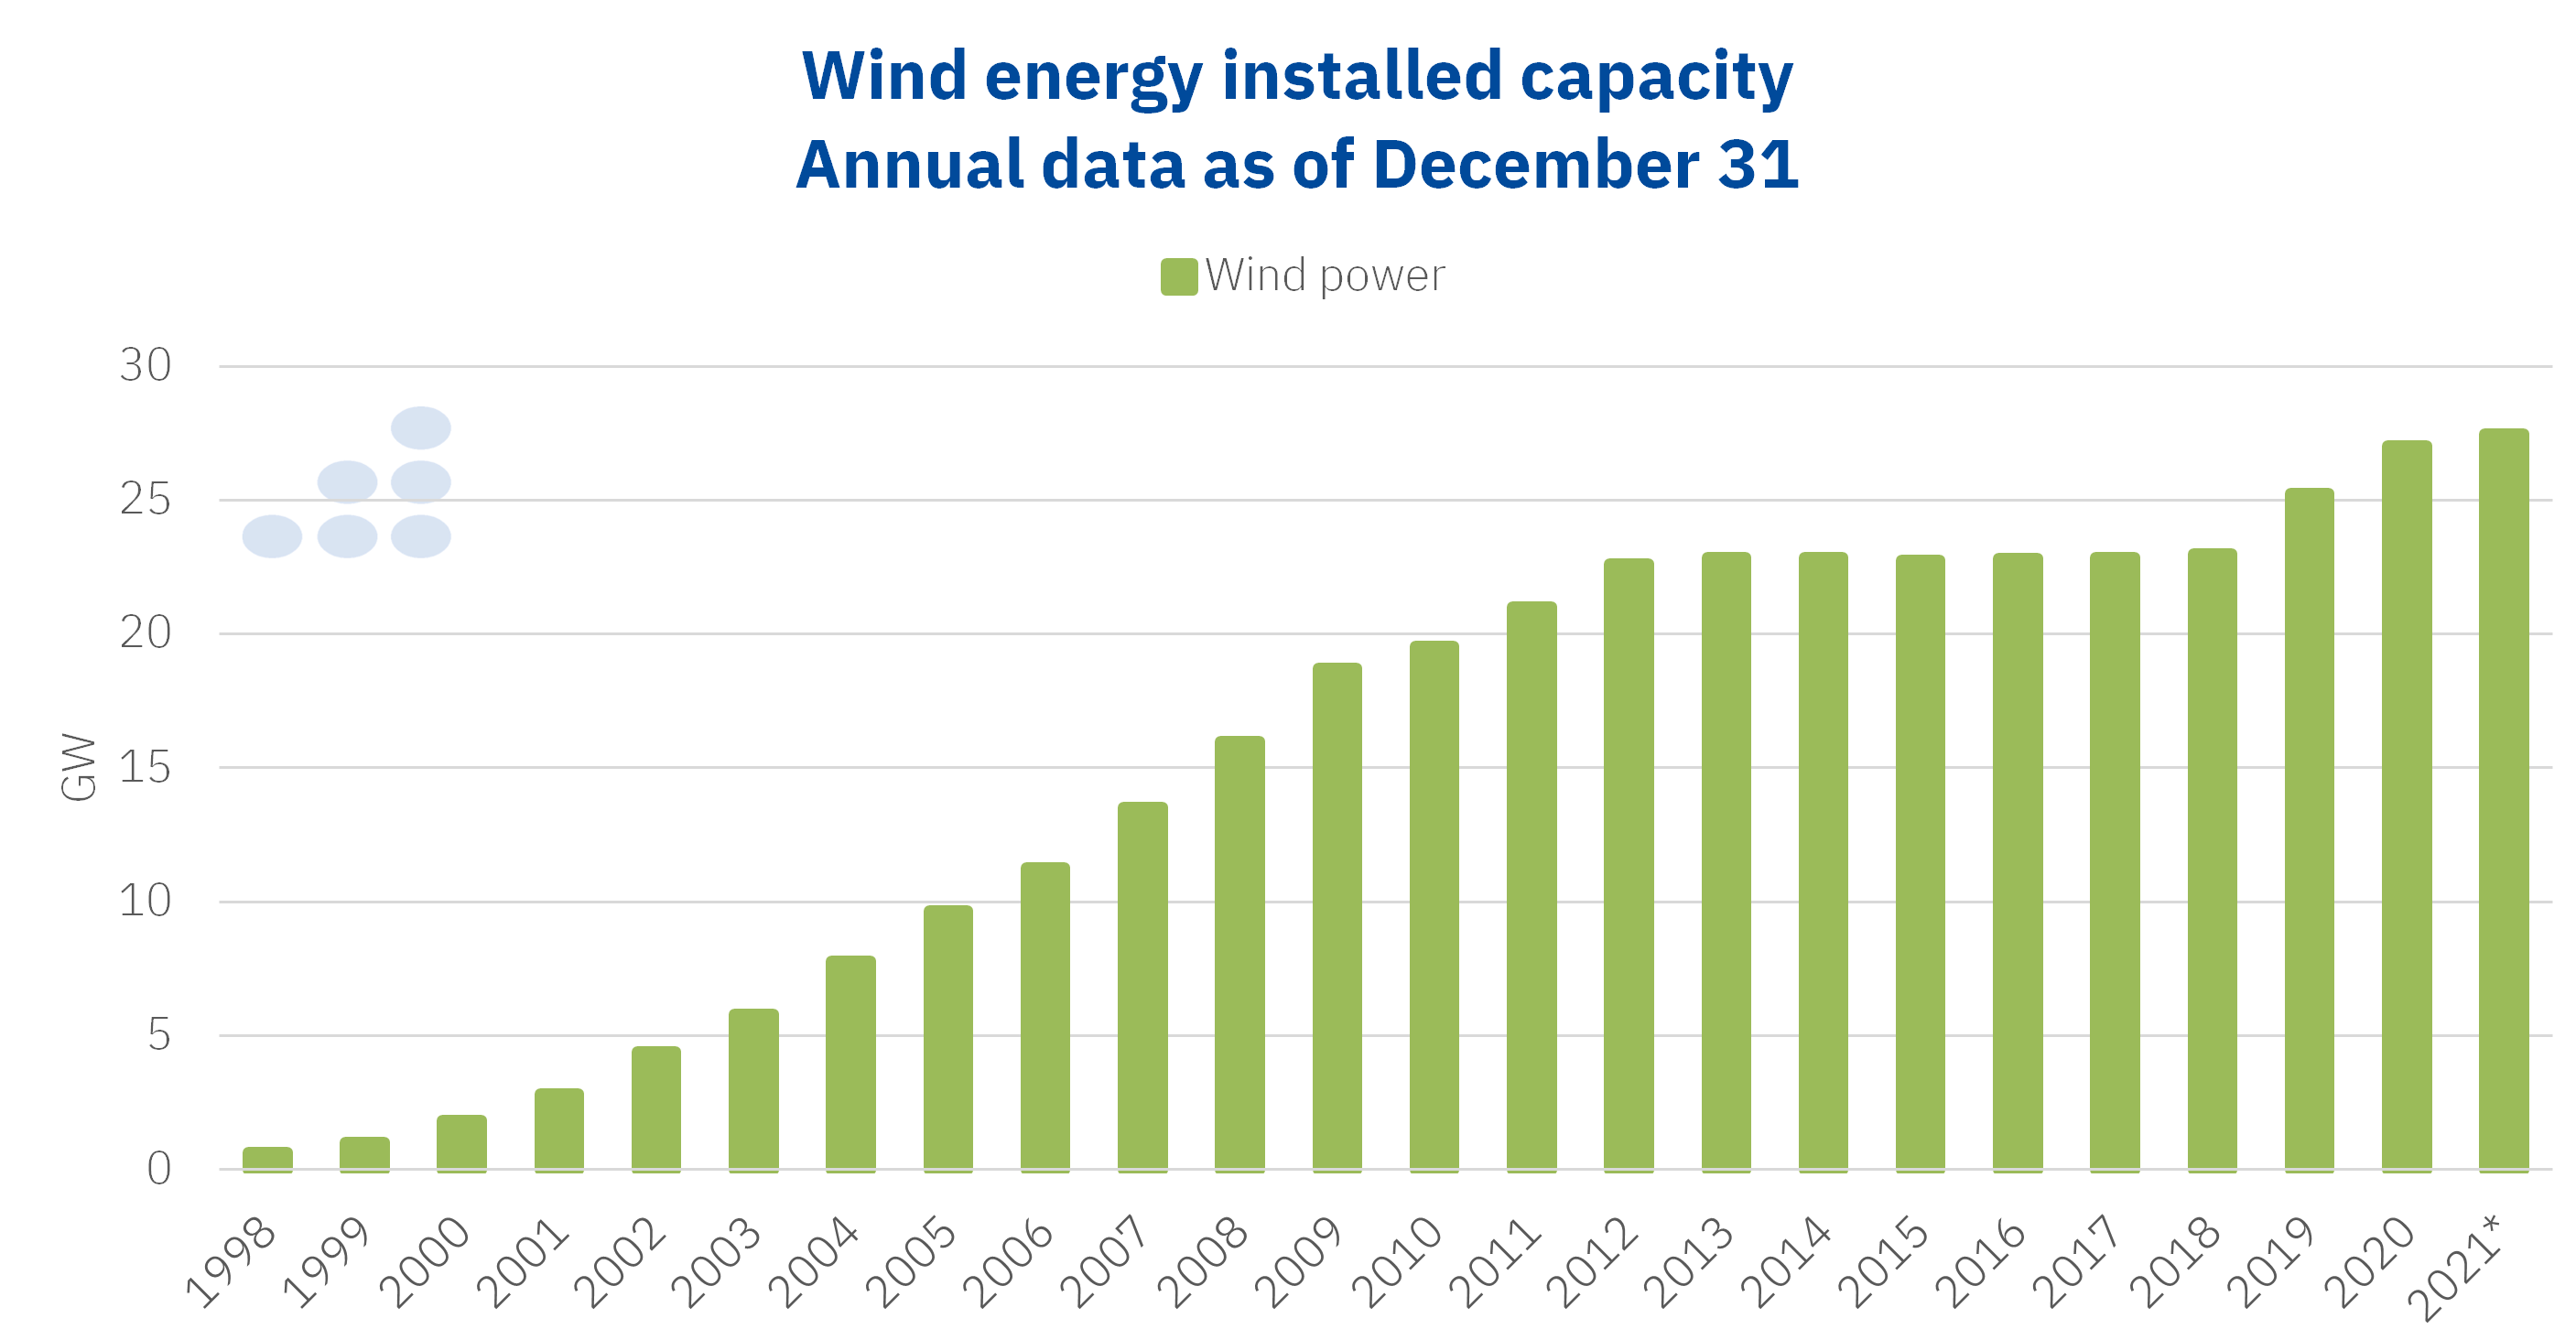 AleaSoft - wind energy installed capacity